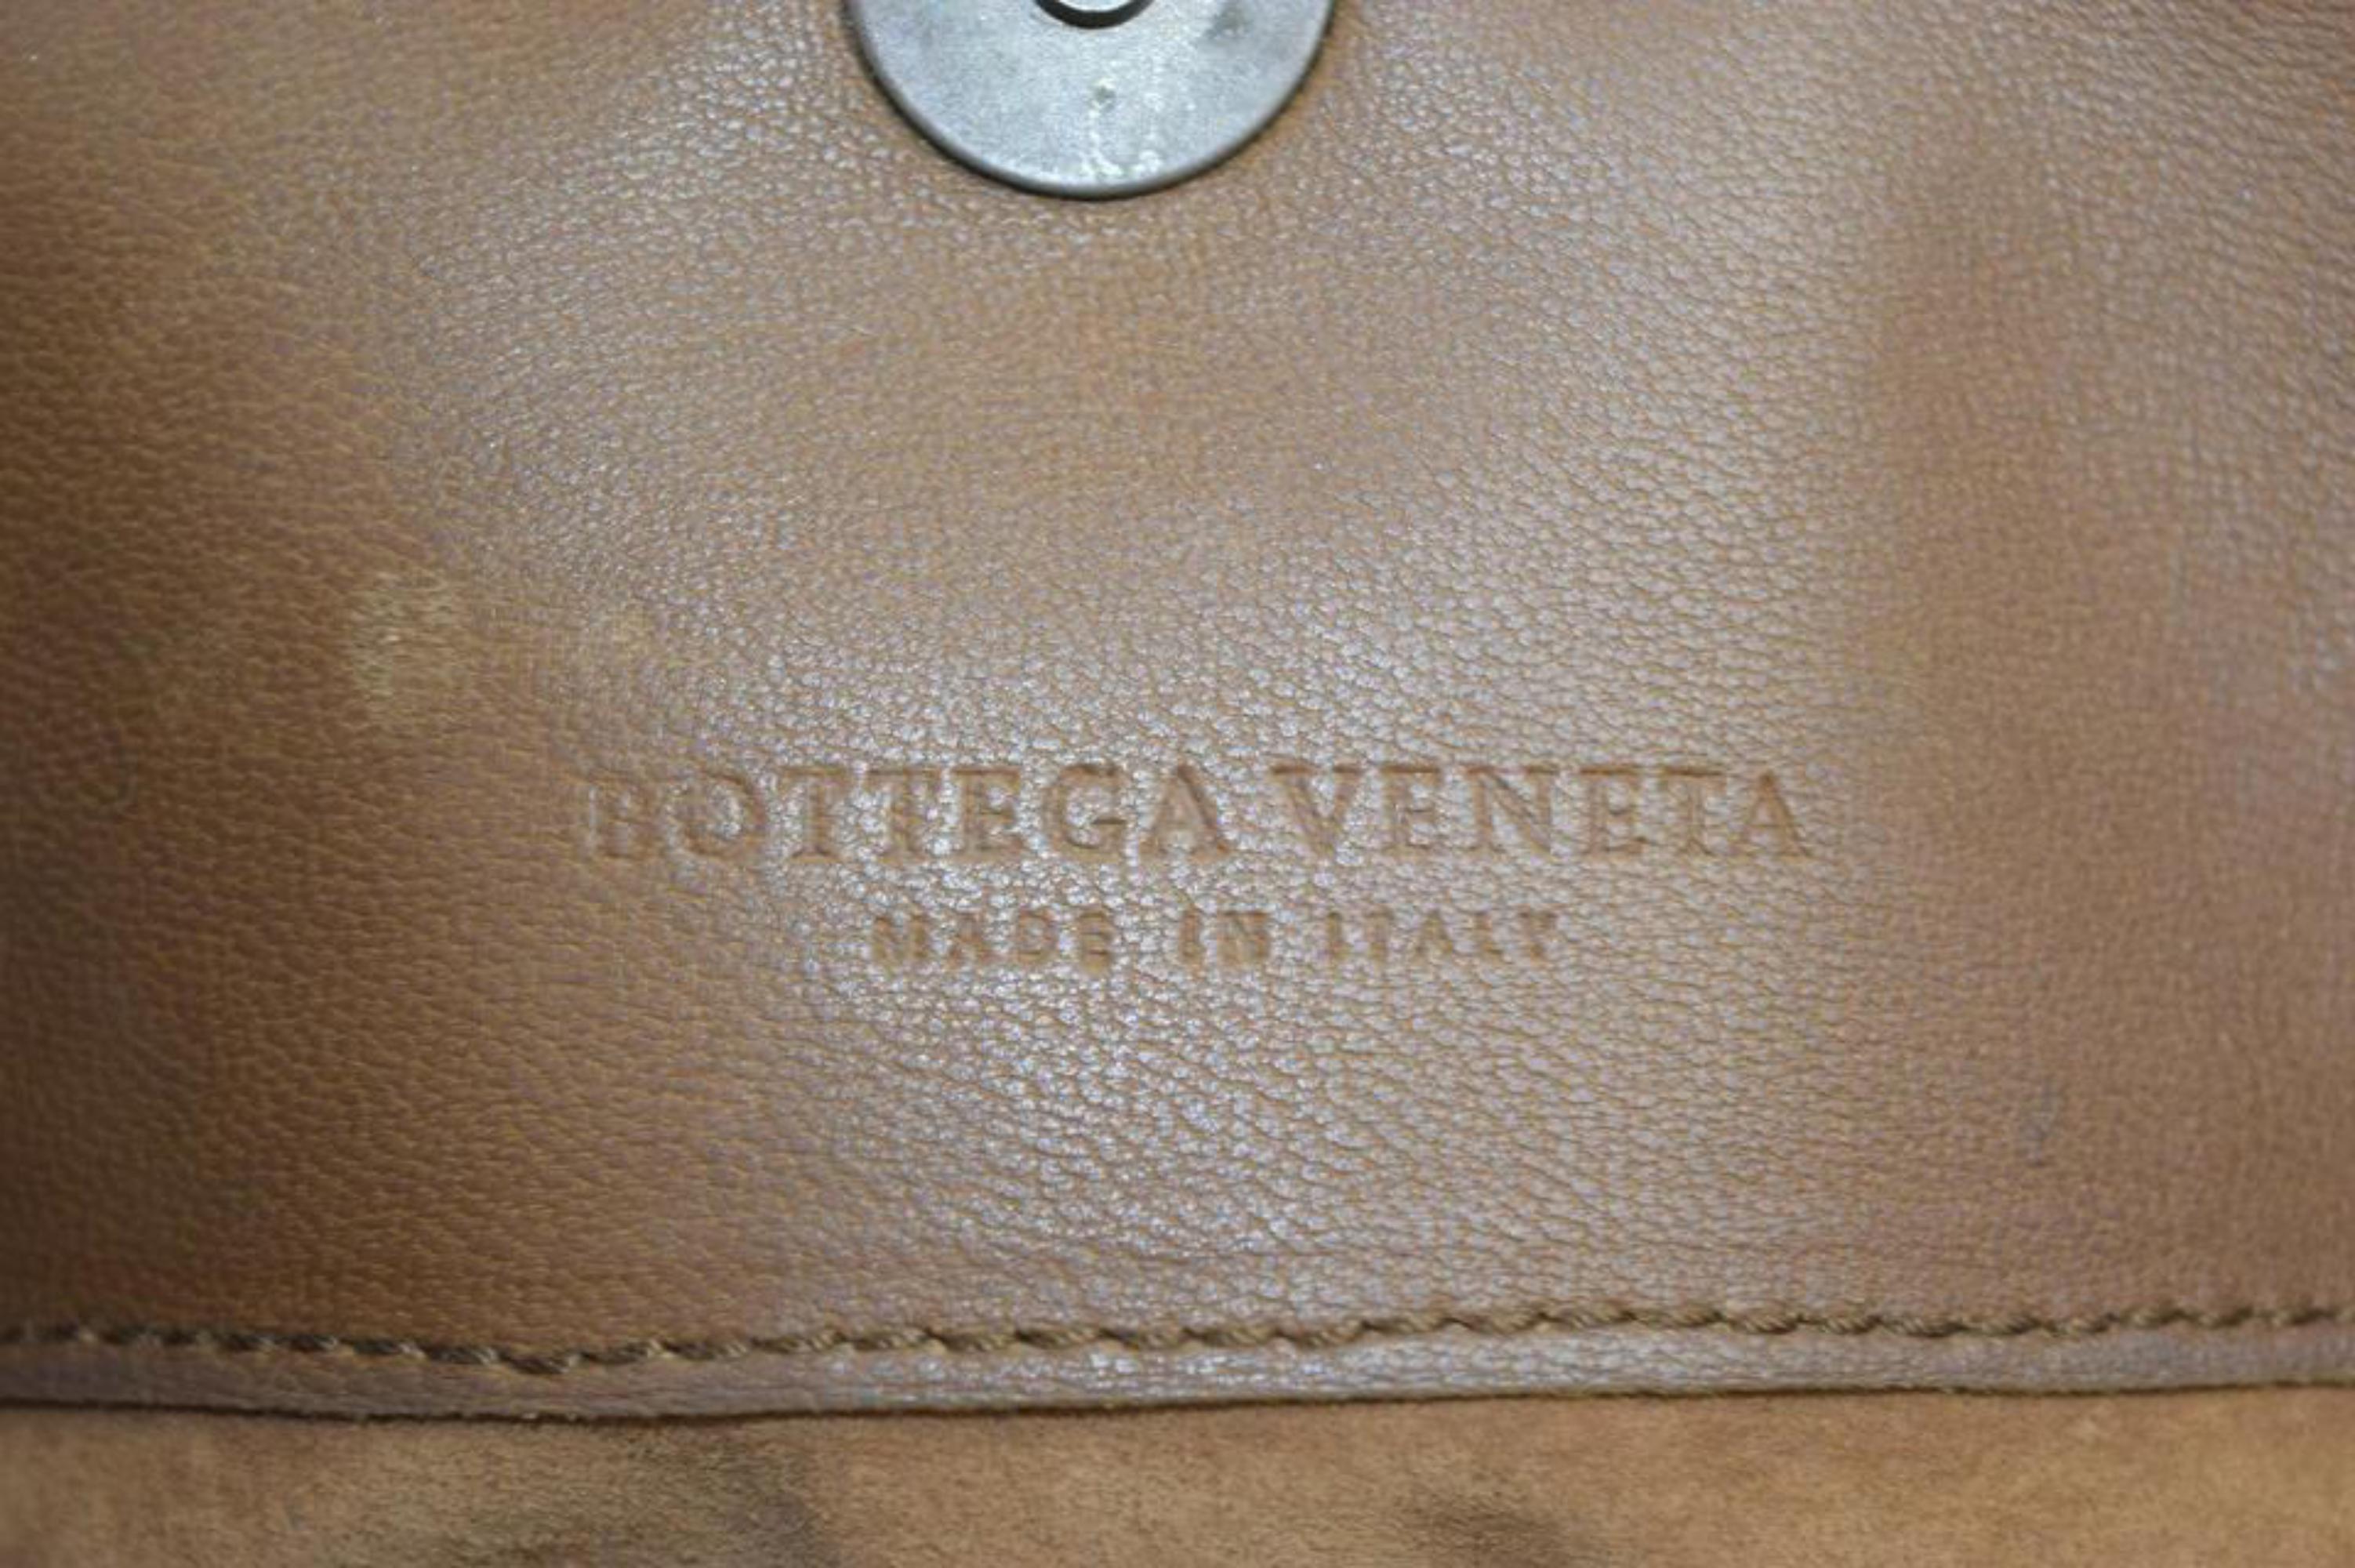 Bottega Veneta Intrecciato Woven Tote 865639 Brown Patent Leather Shoulder Bag In Good Condition For Sale In Forest Hills, NY